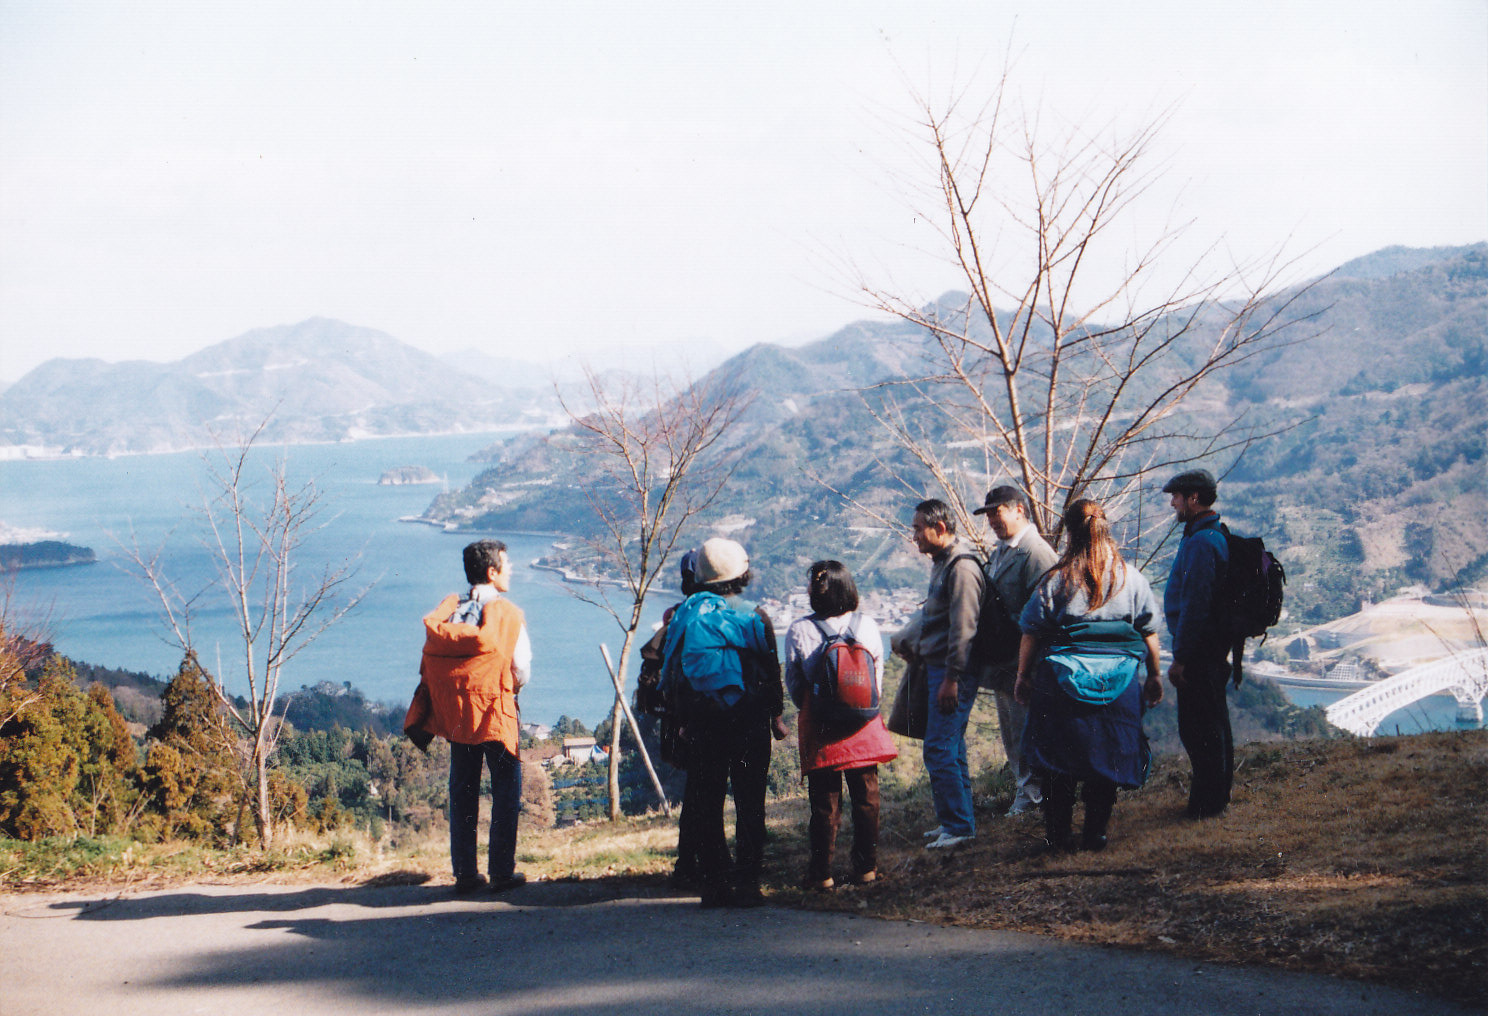 Mt. Jumonji